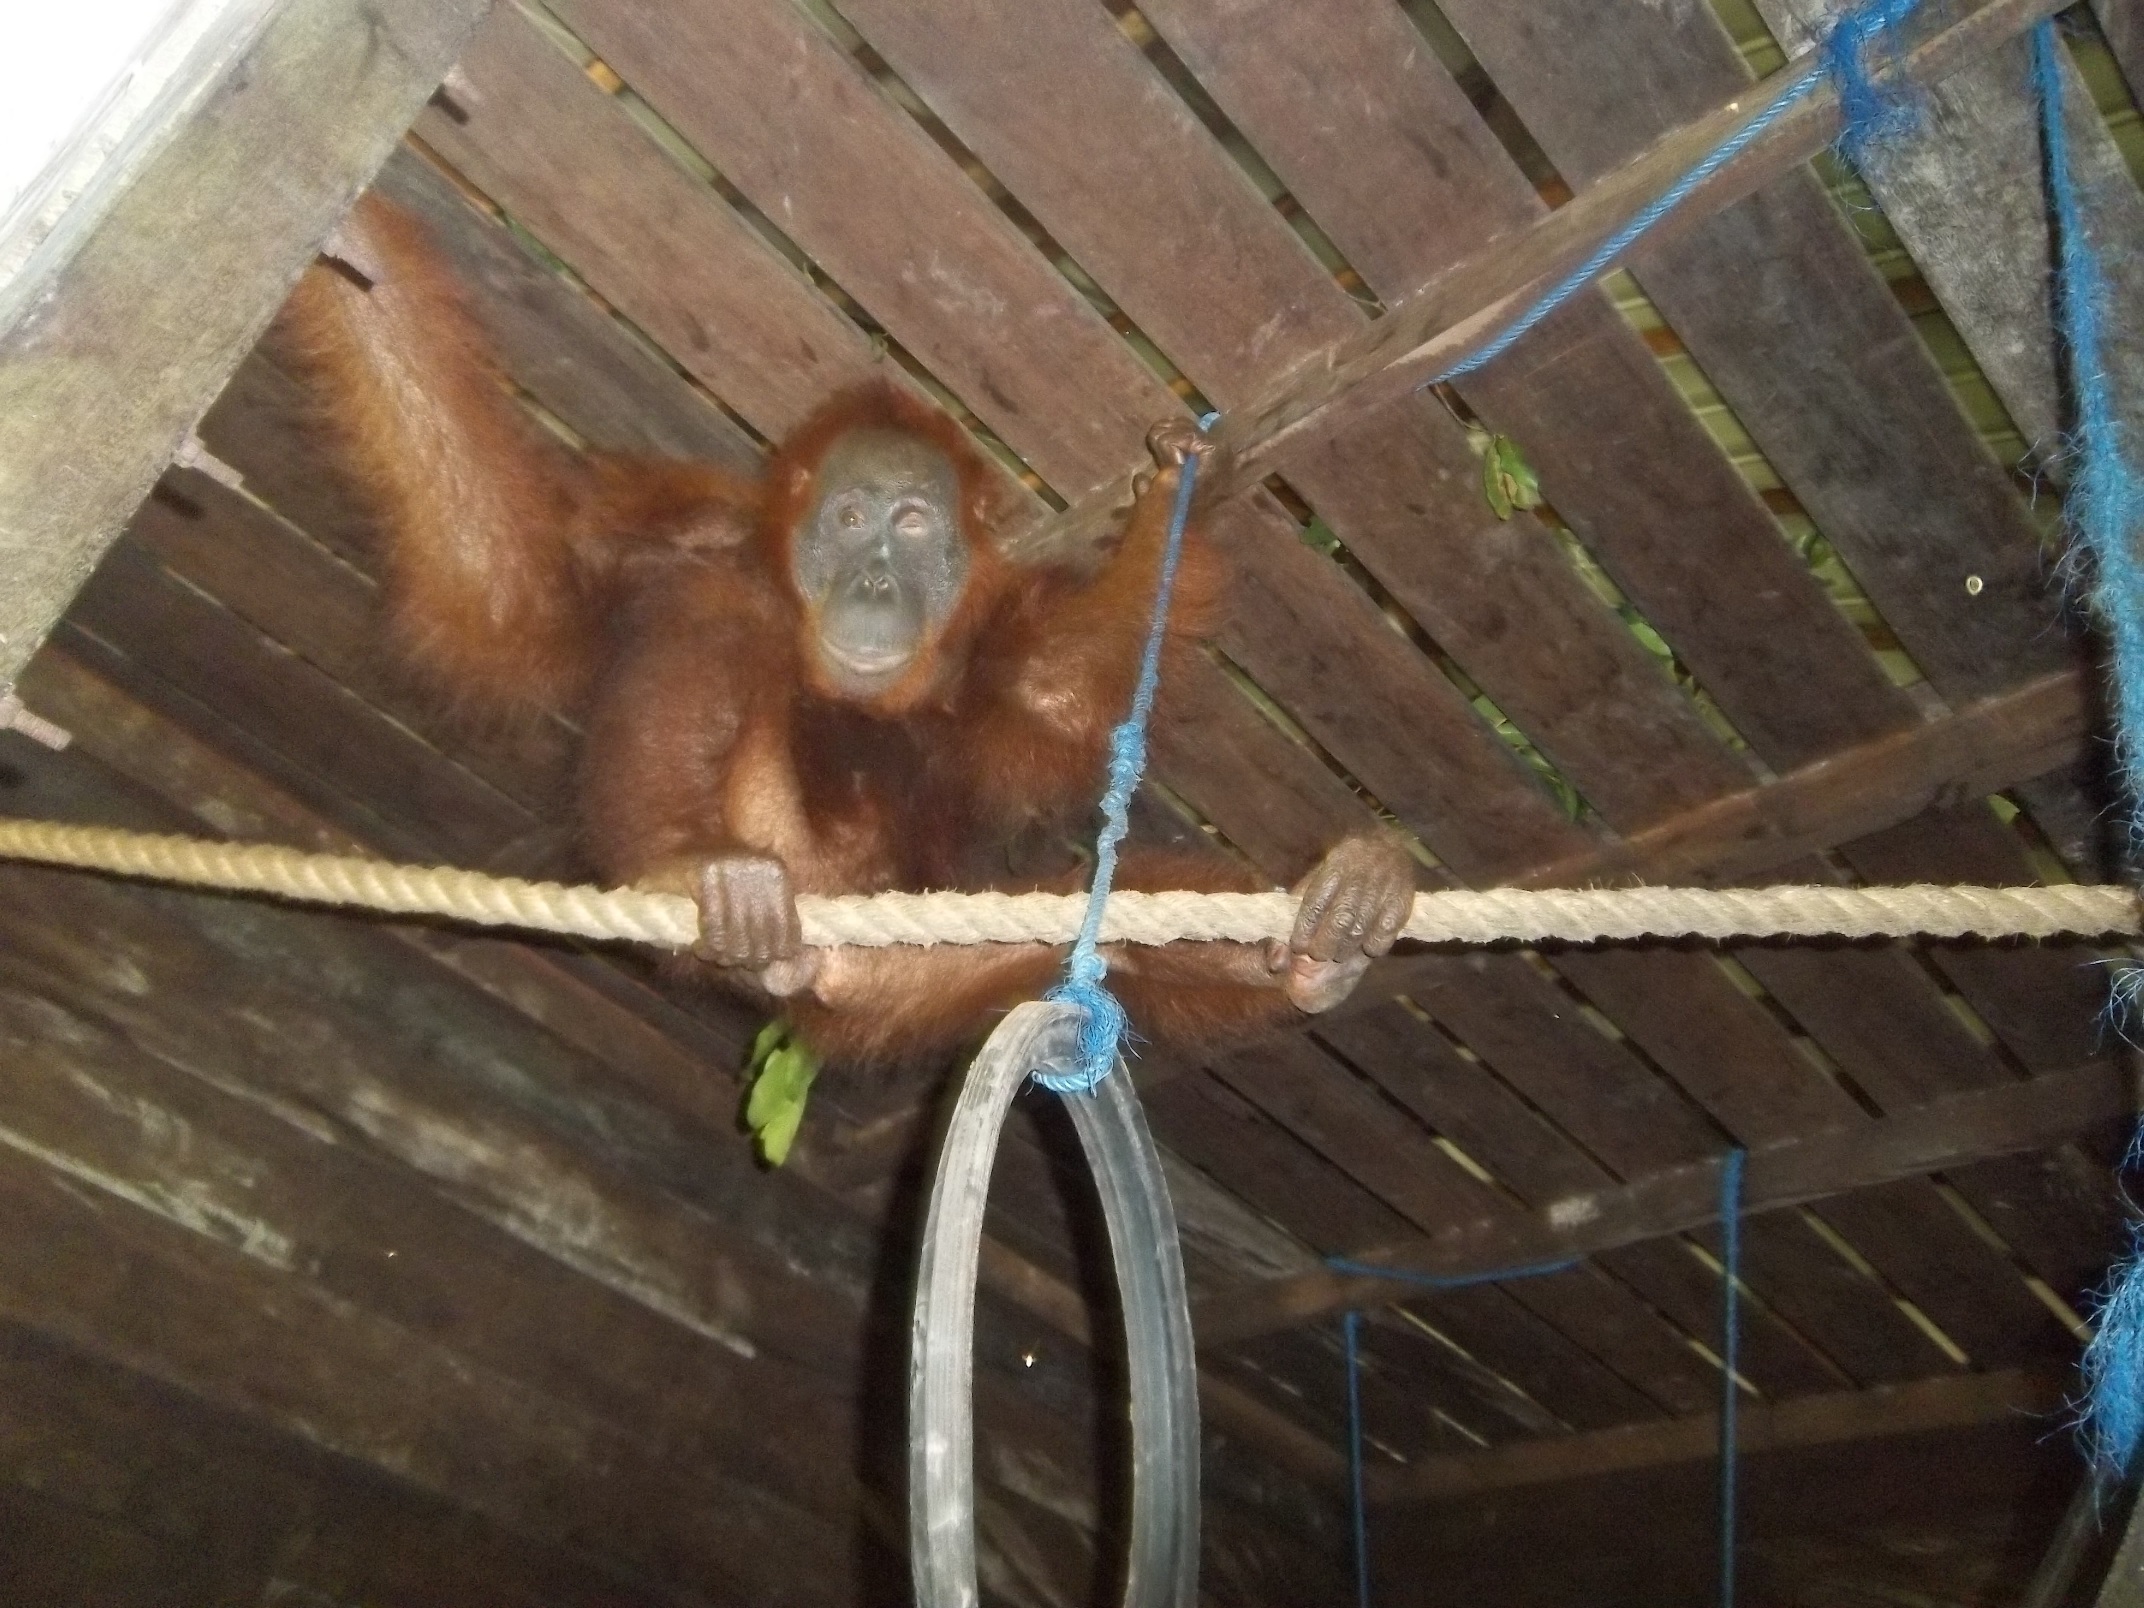 Aan in her permanent enclosure, with enrichment. Image© Orangutan Foundation.